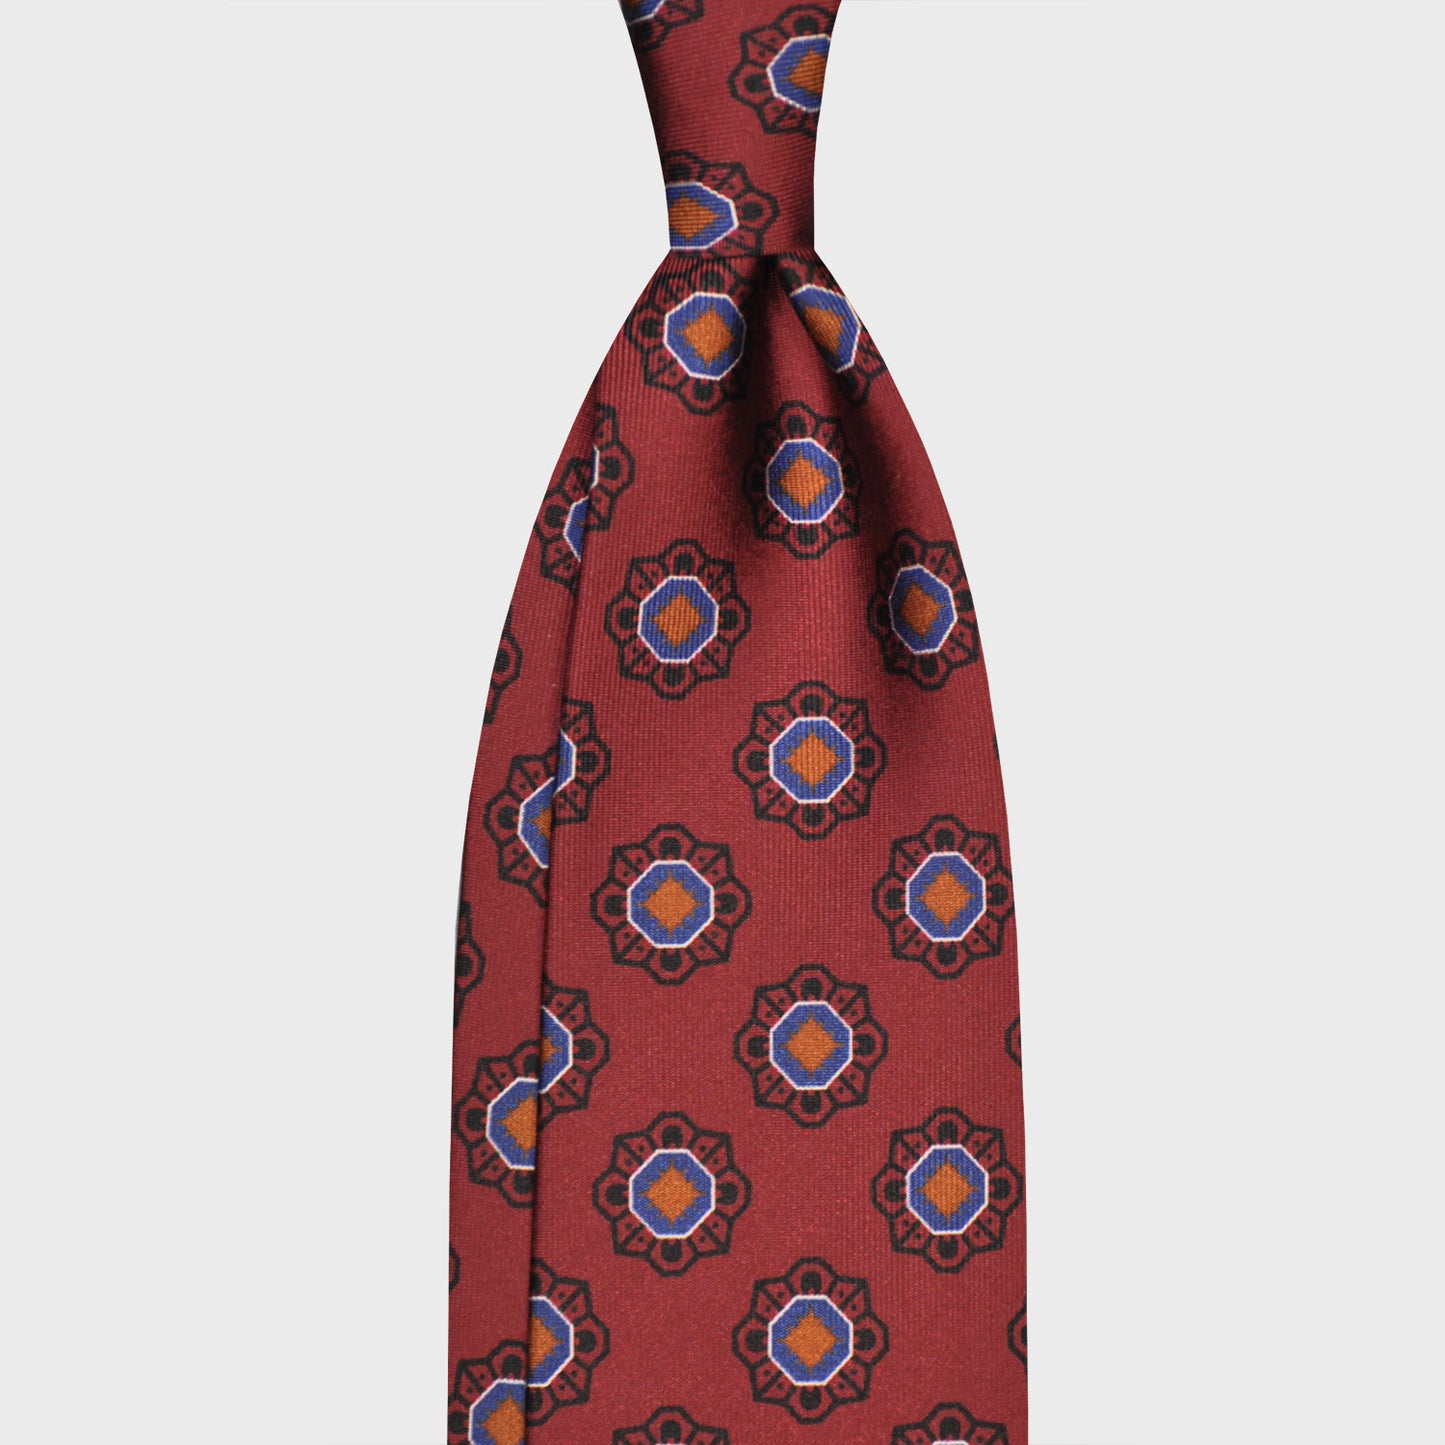 F.Marino Silk Tie 3 Folds Geometric Flower Brick Red-Wools Boutique Uomo